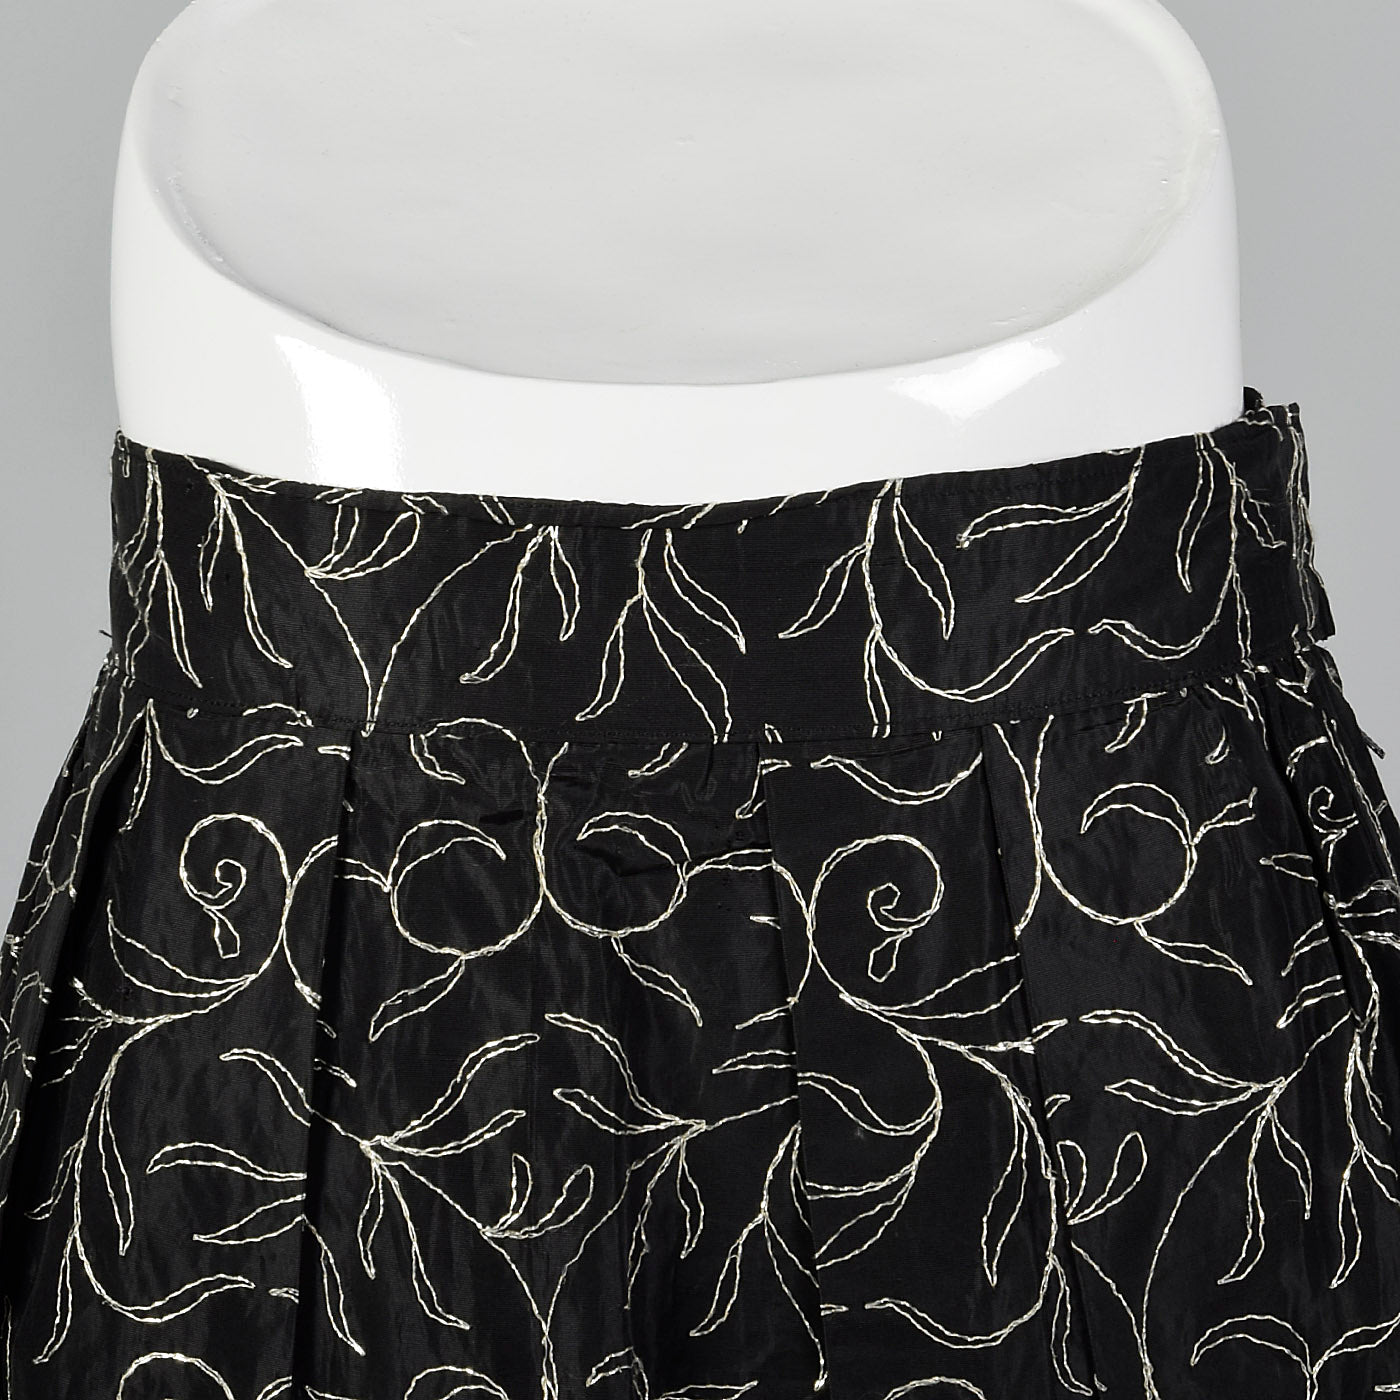 1950s Black Taffeta Skirt with Metallic Silver Embroidery